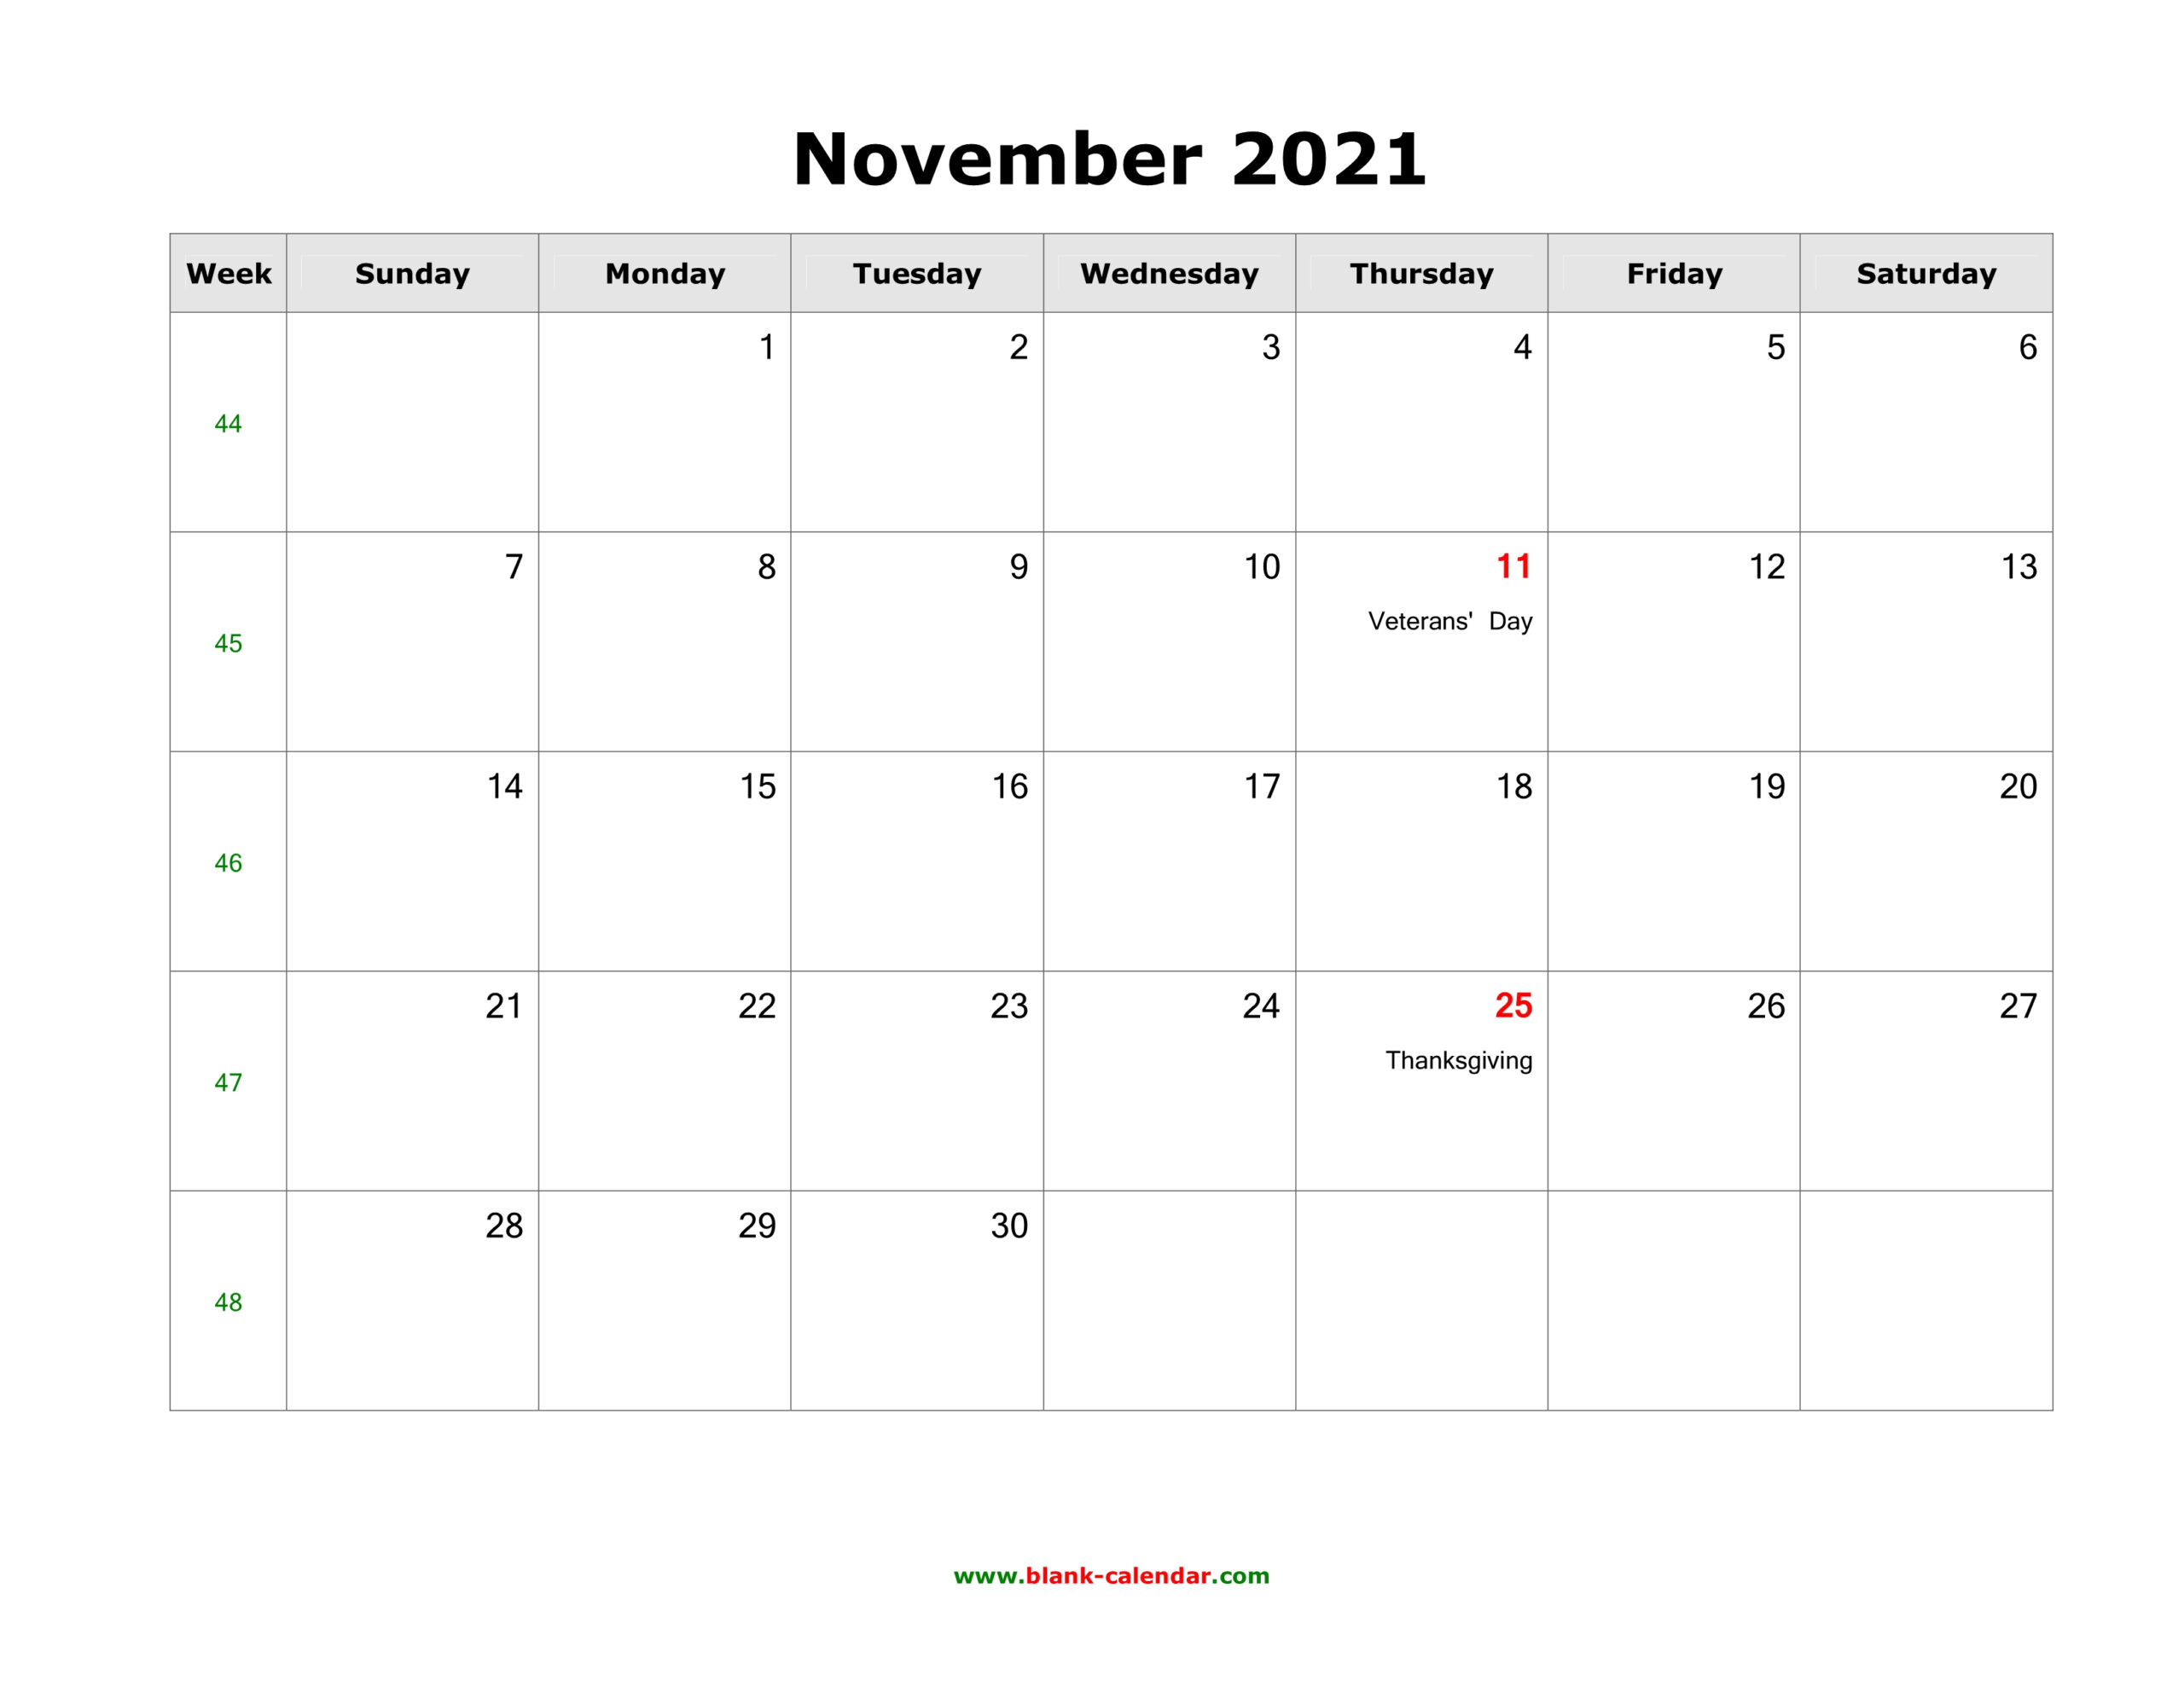 November 2021 Blank Calendar | Free Download Calendar